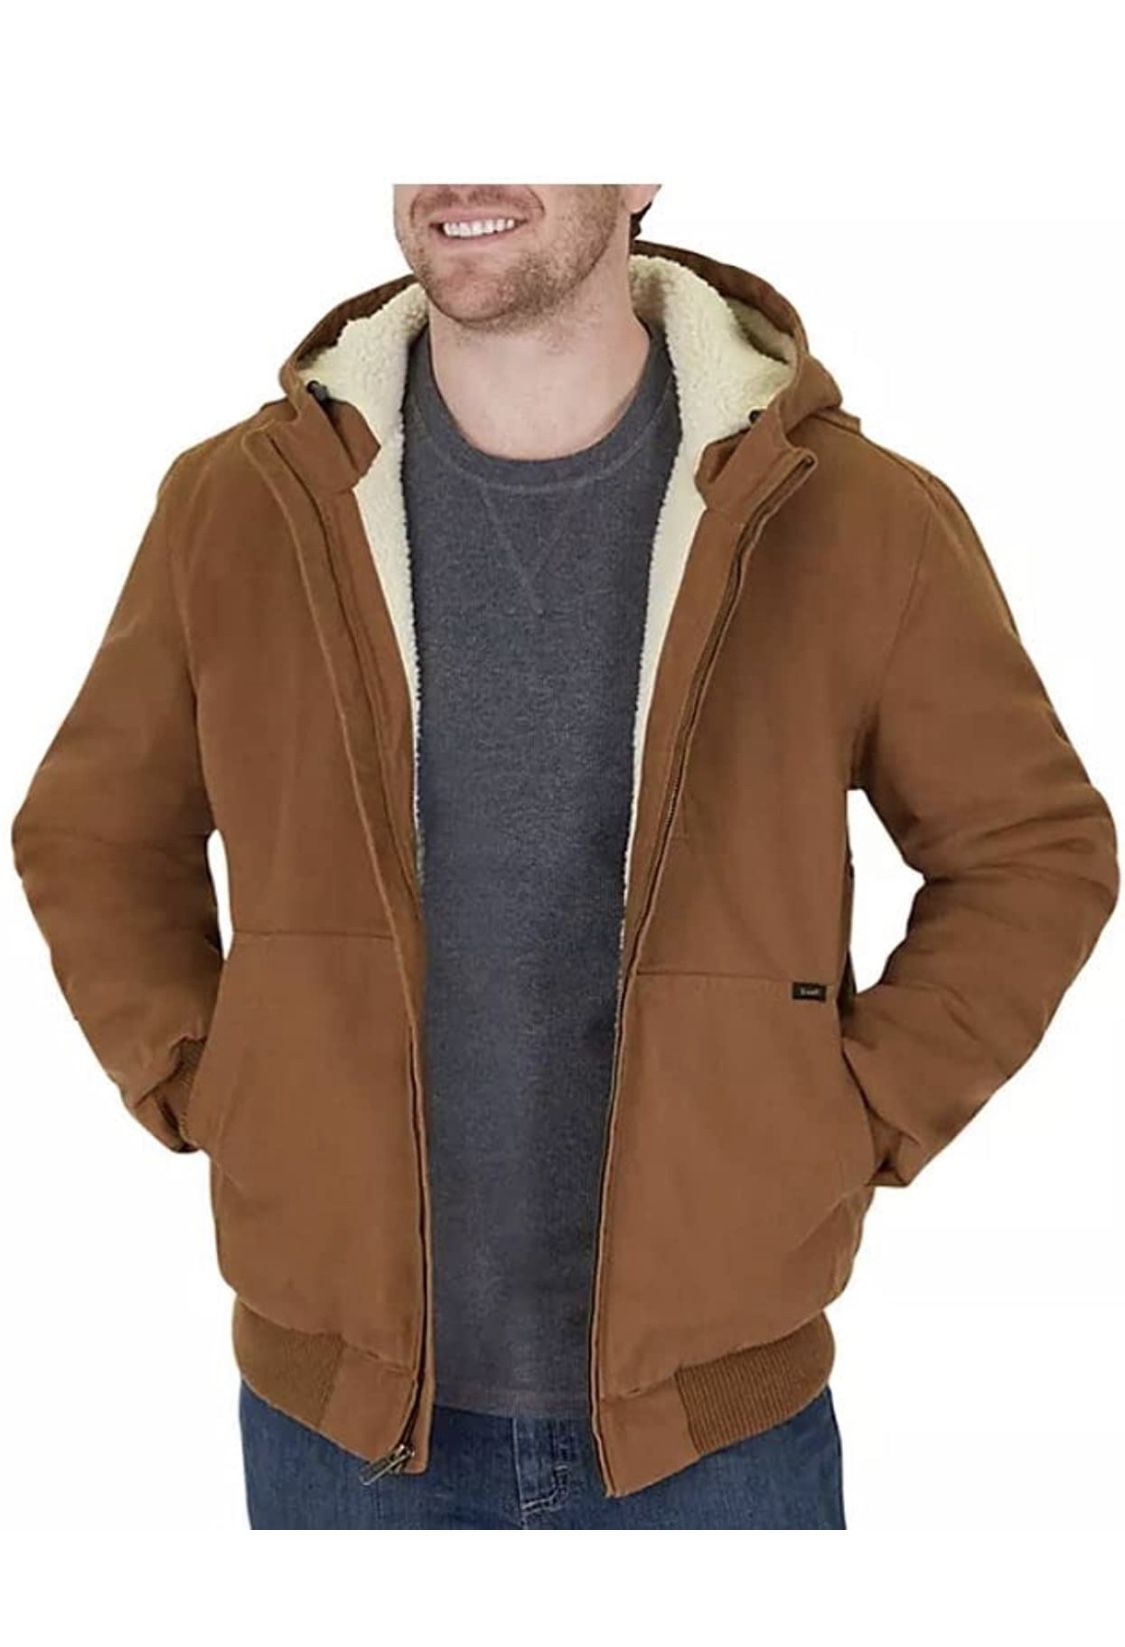 Lee Men's Workwear Lined Sherpa Jacket Secured Zipper Front pocket L Tobacco